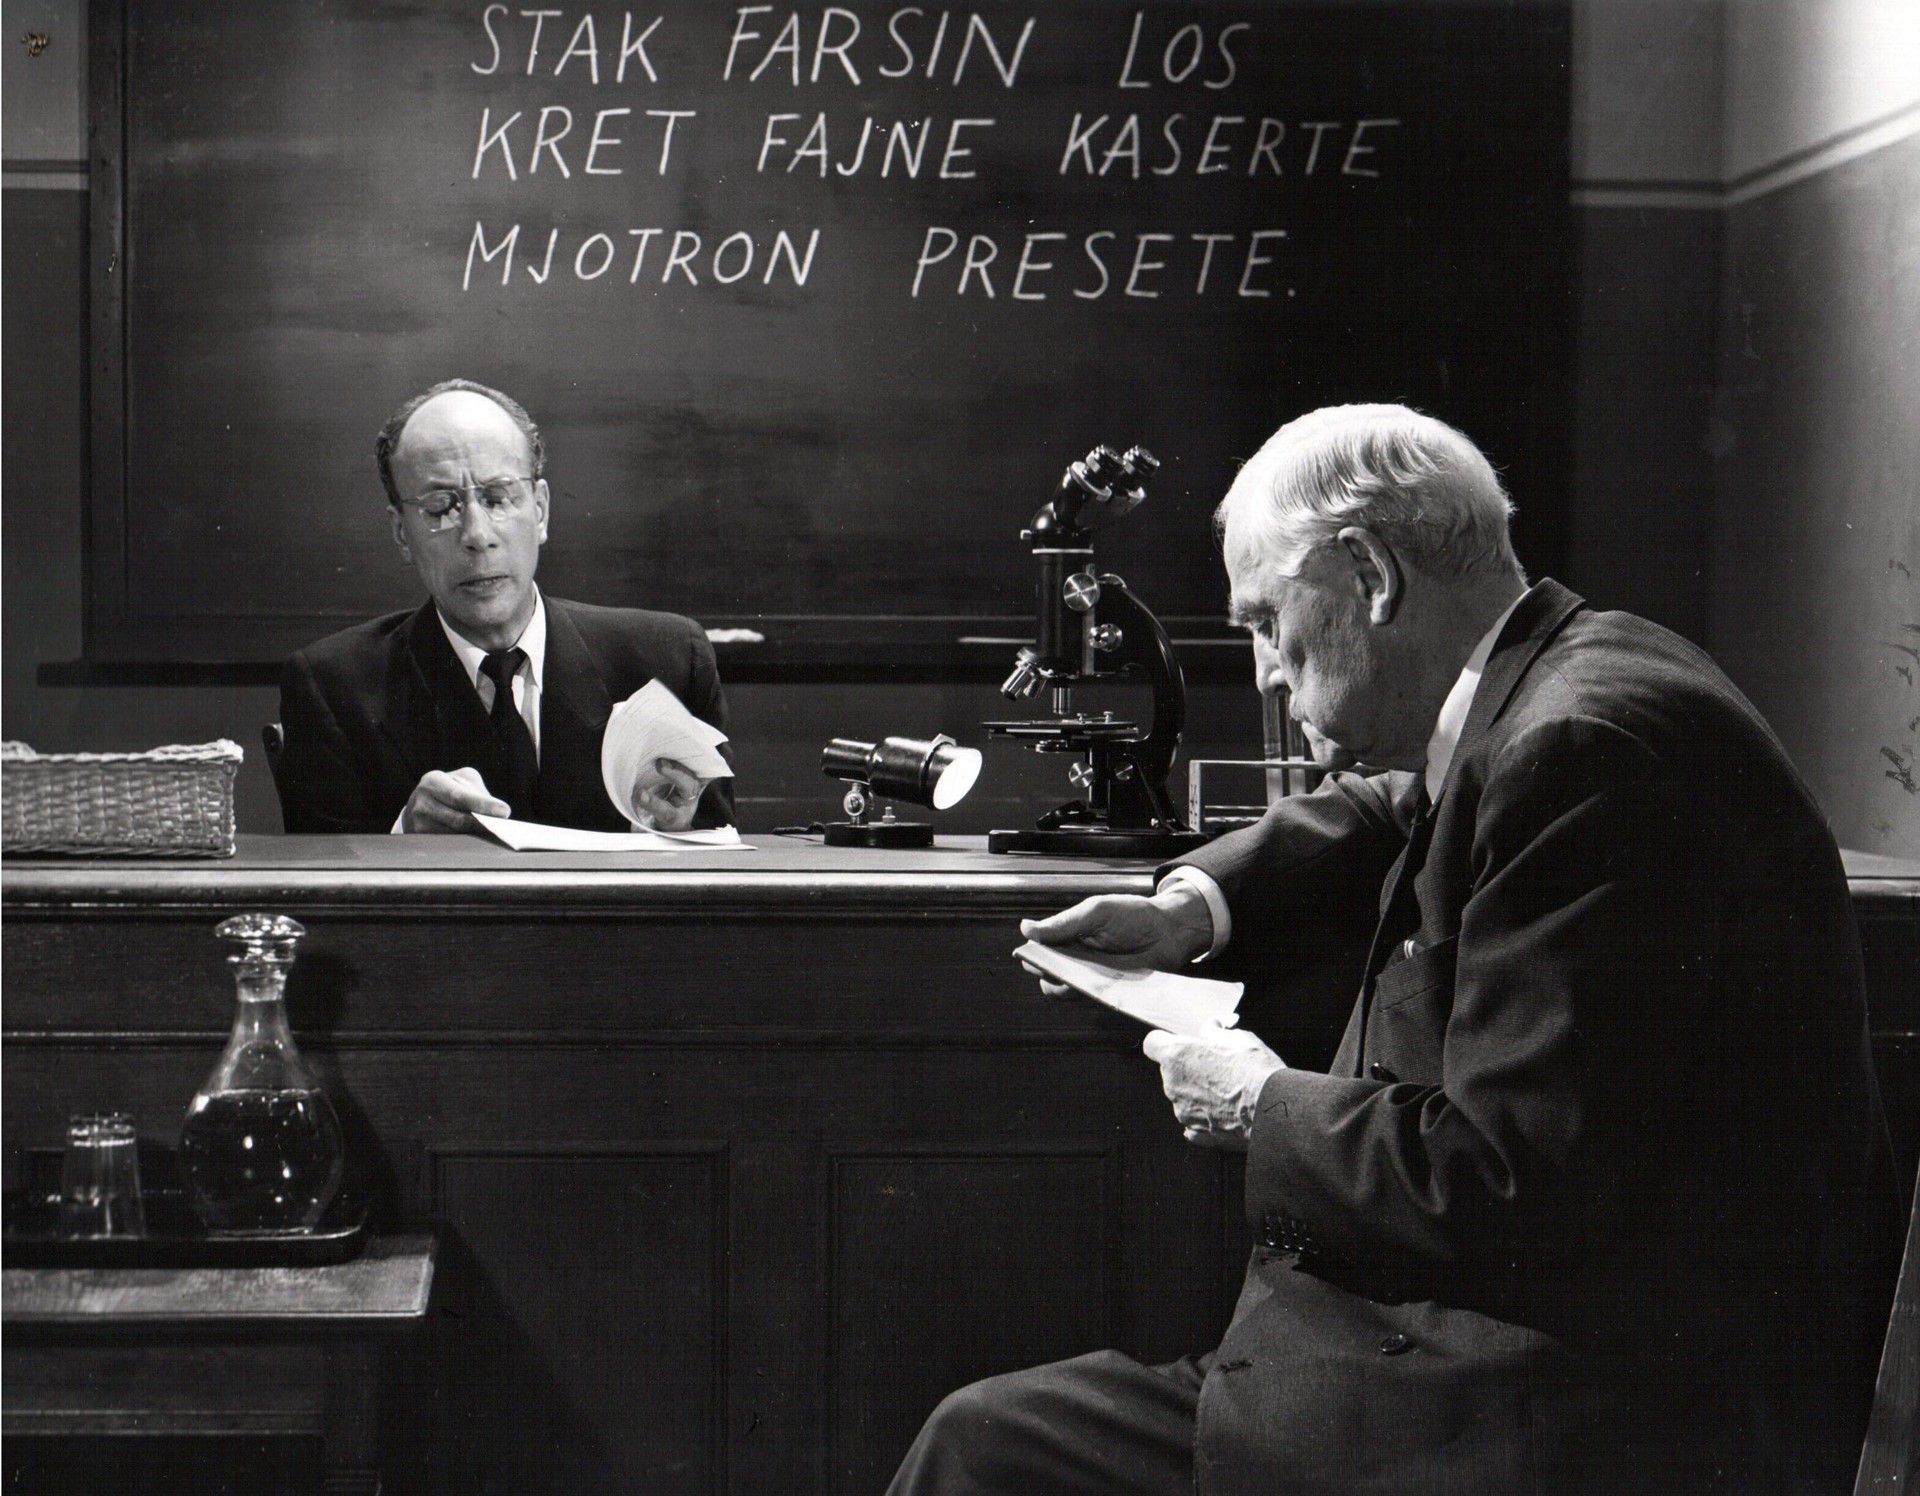 Il posto delle fragole (1957) Ingmar Bergman - Recensione | Quinlan.it